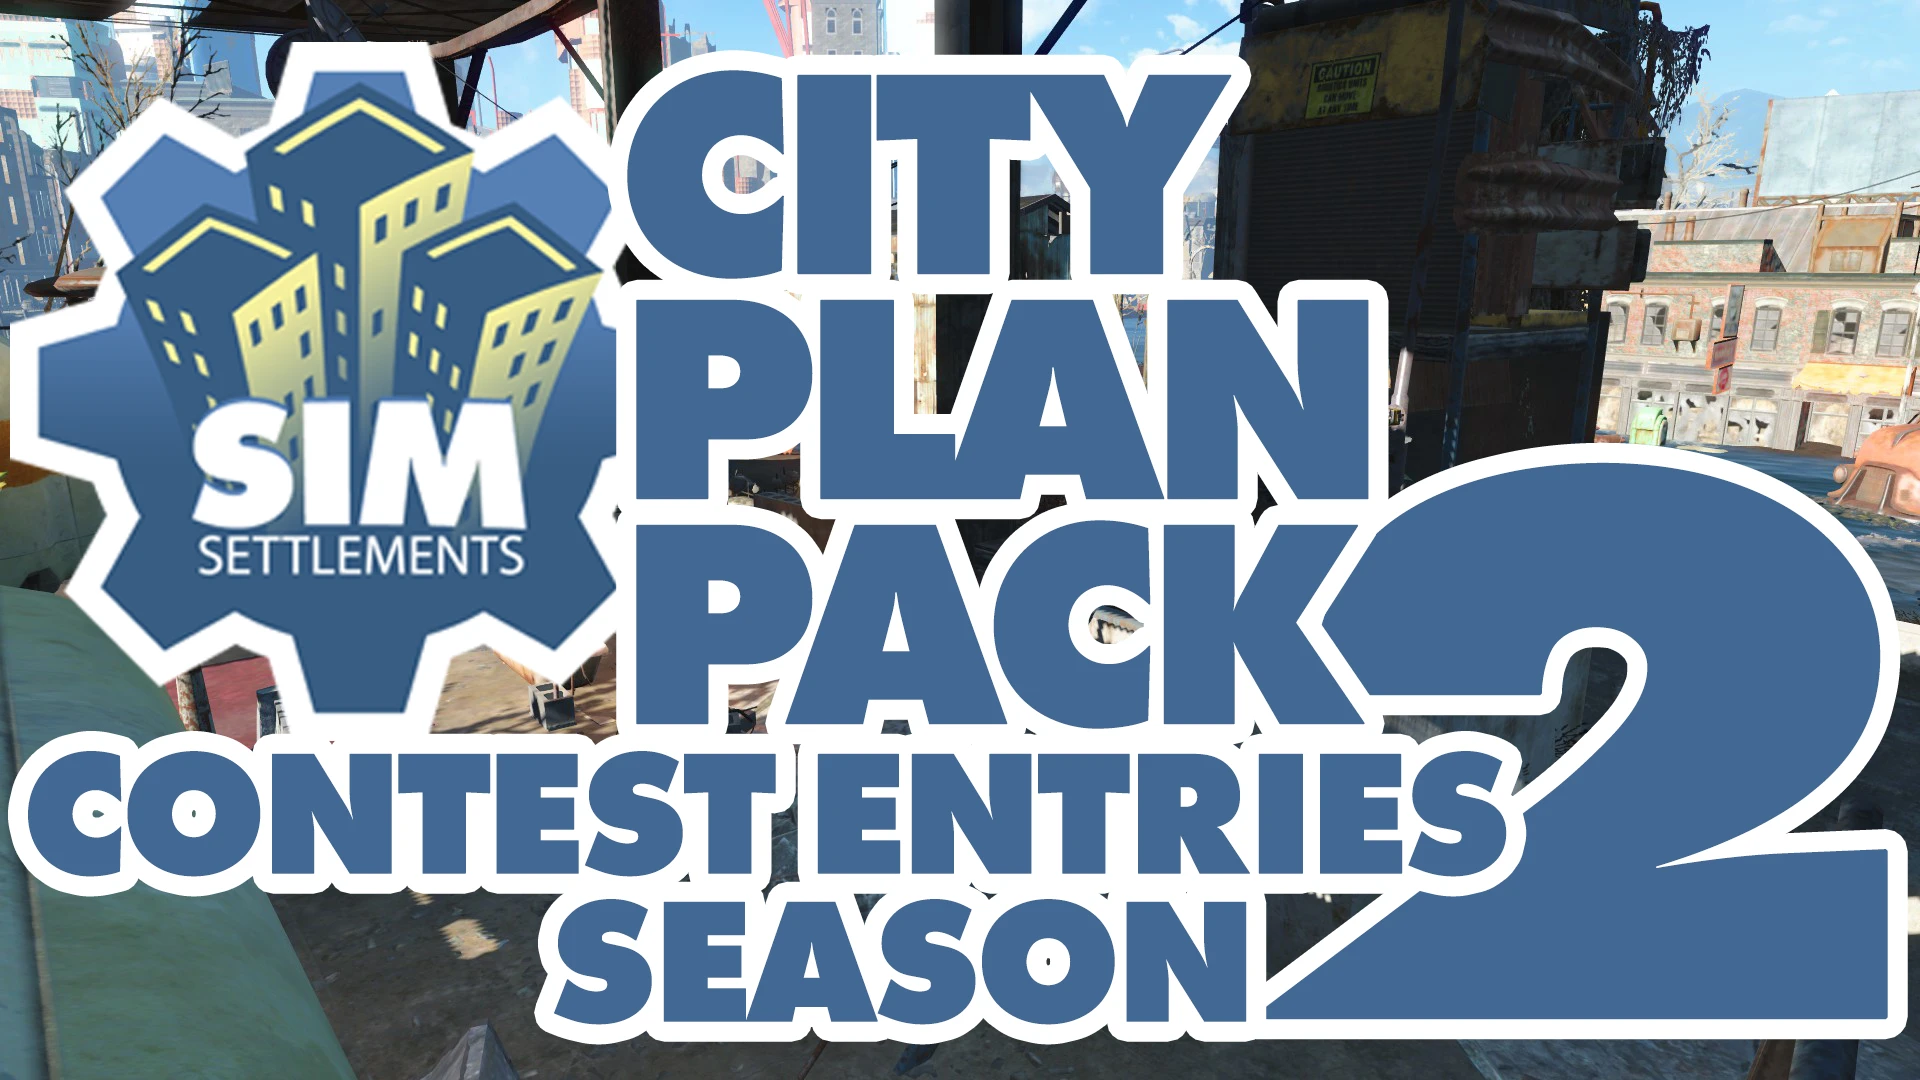 Sim settlements 2 chapter 2. SIM Settlements: City Plan Pack - Contest entries - Vault 88 [xb1]. SIM Settlements: City Plan Pack - Contest entries - Vault 88 [xb1 как запустить.